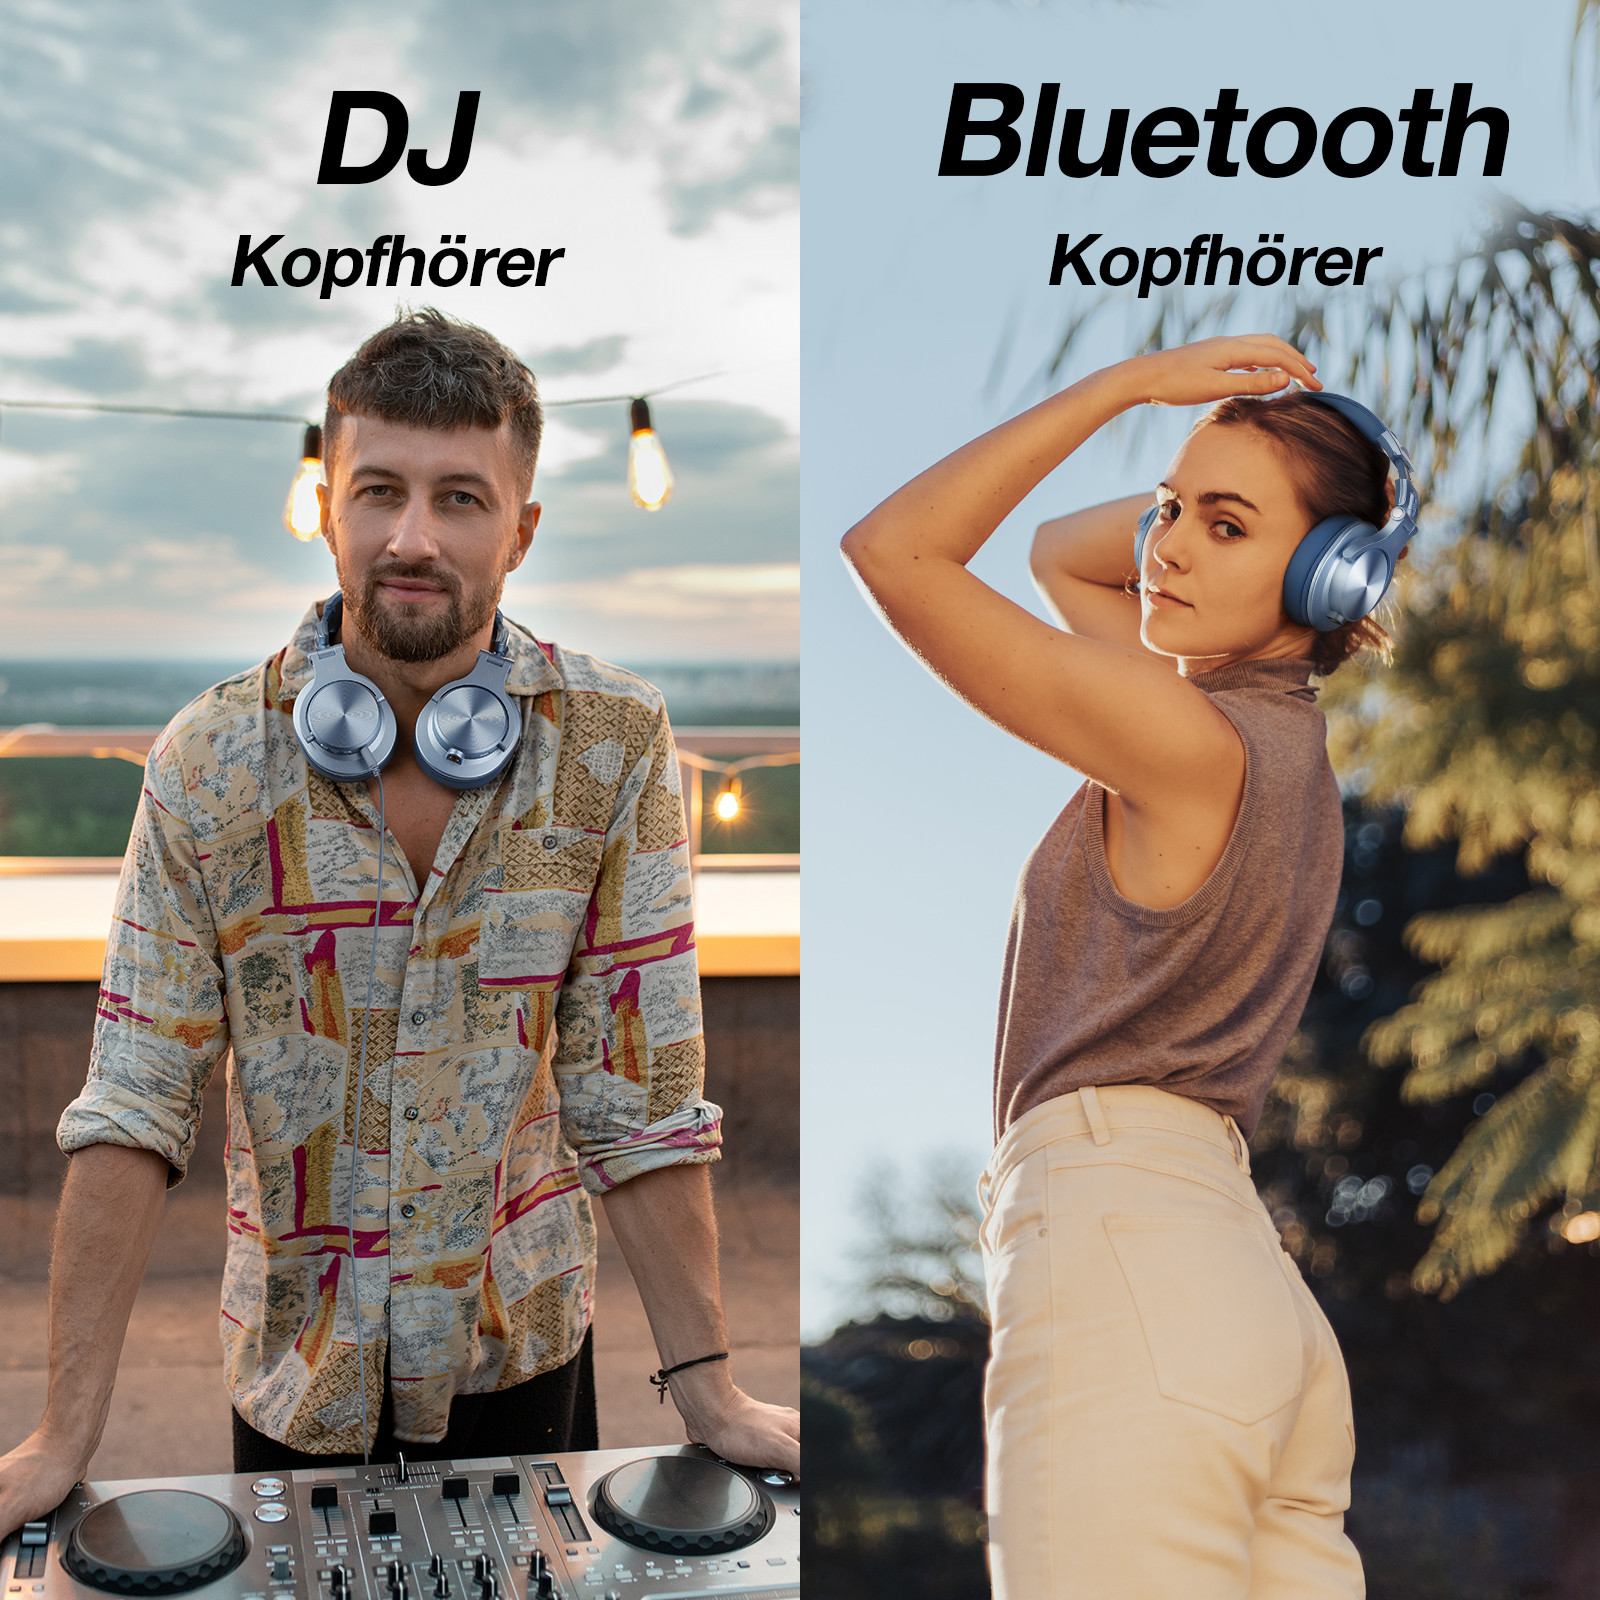 Blau Over-ear Headphones, Bluetooth-Kopfhörer A70 ONEODIO